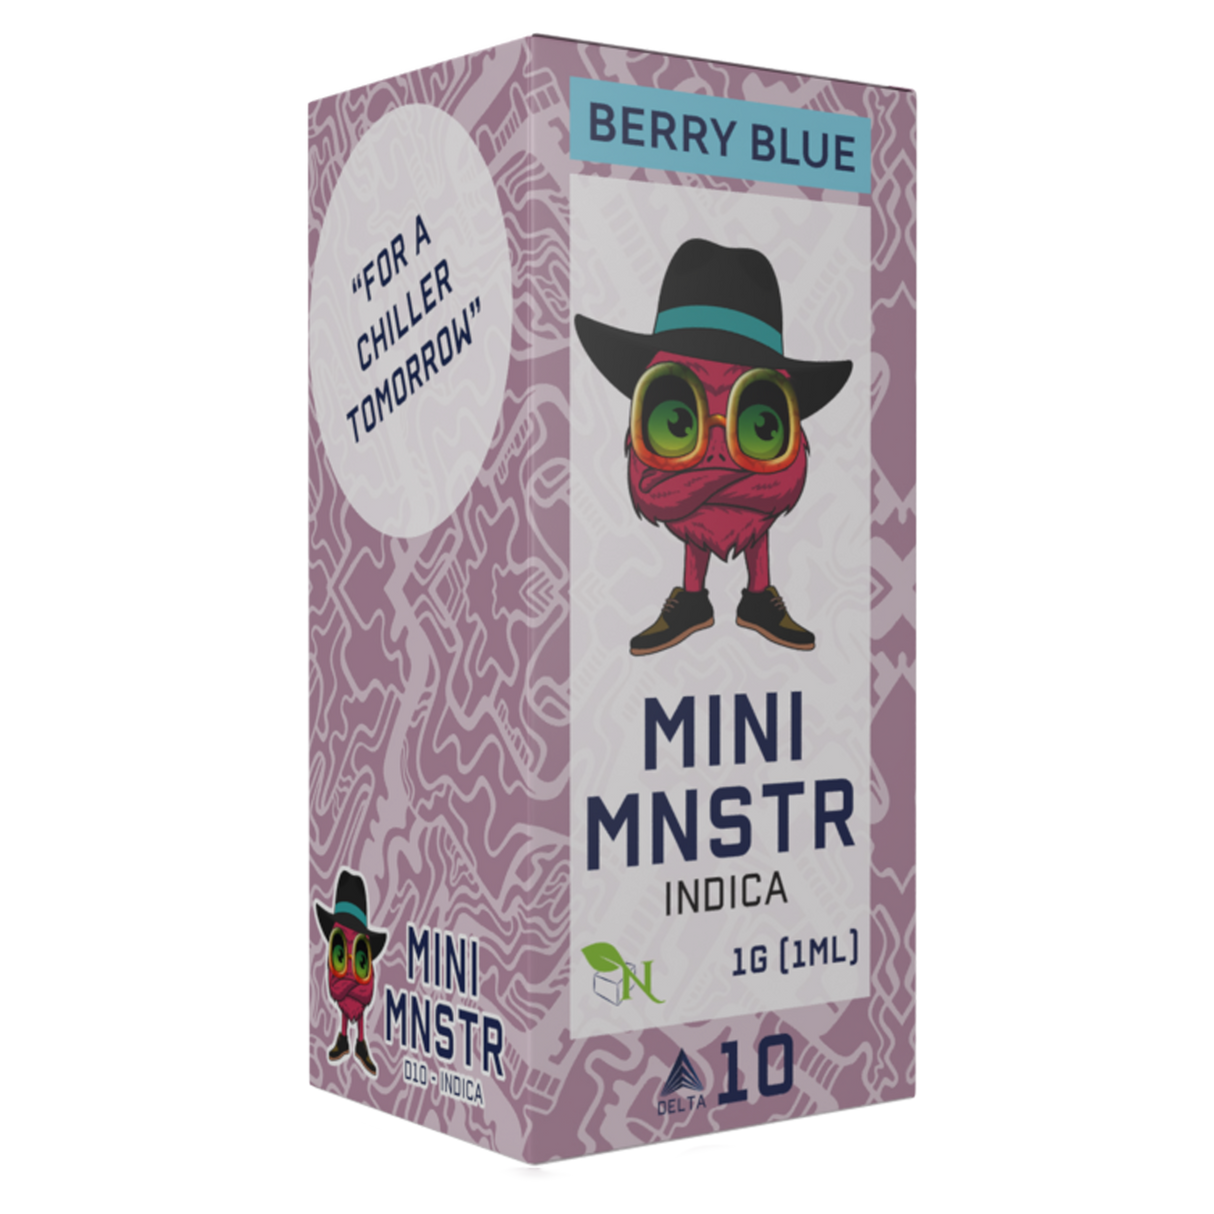 AGFN Mini Mnster 1 Gram Vape: Delta 10 Berry Blue (Indica)